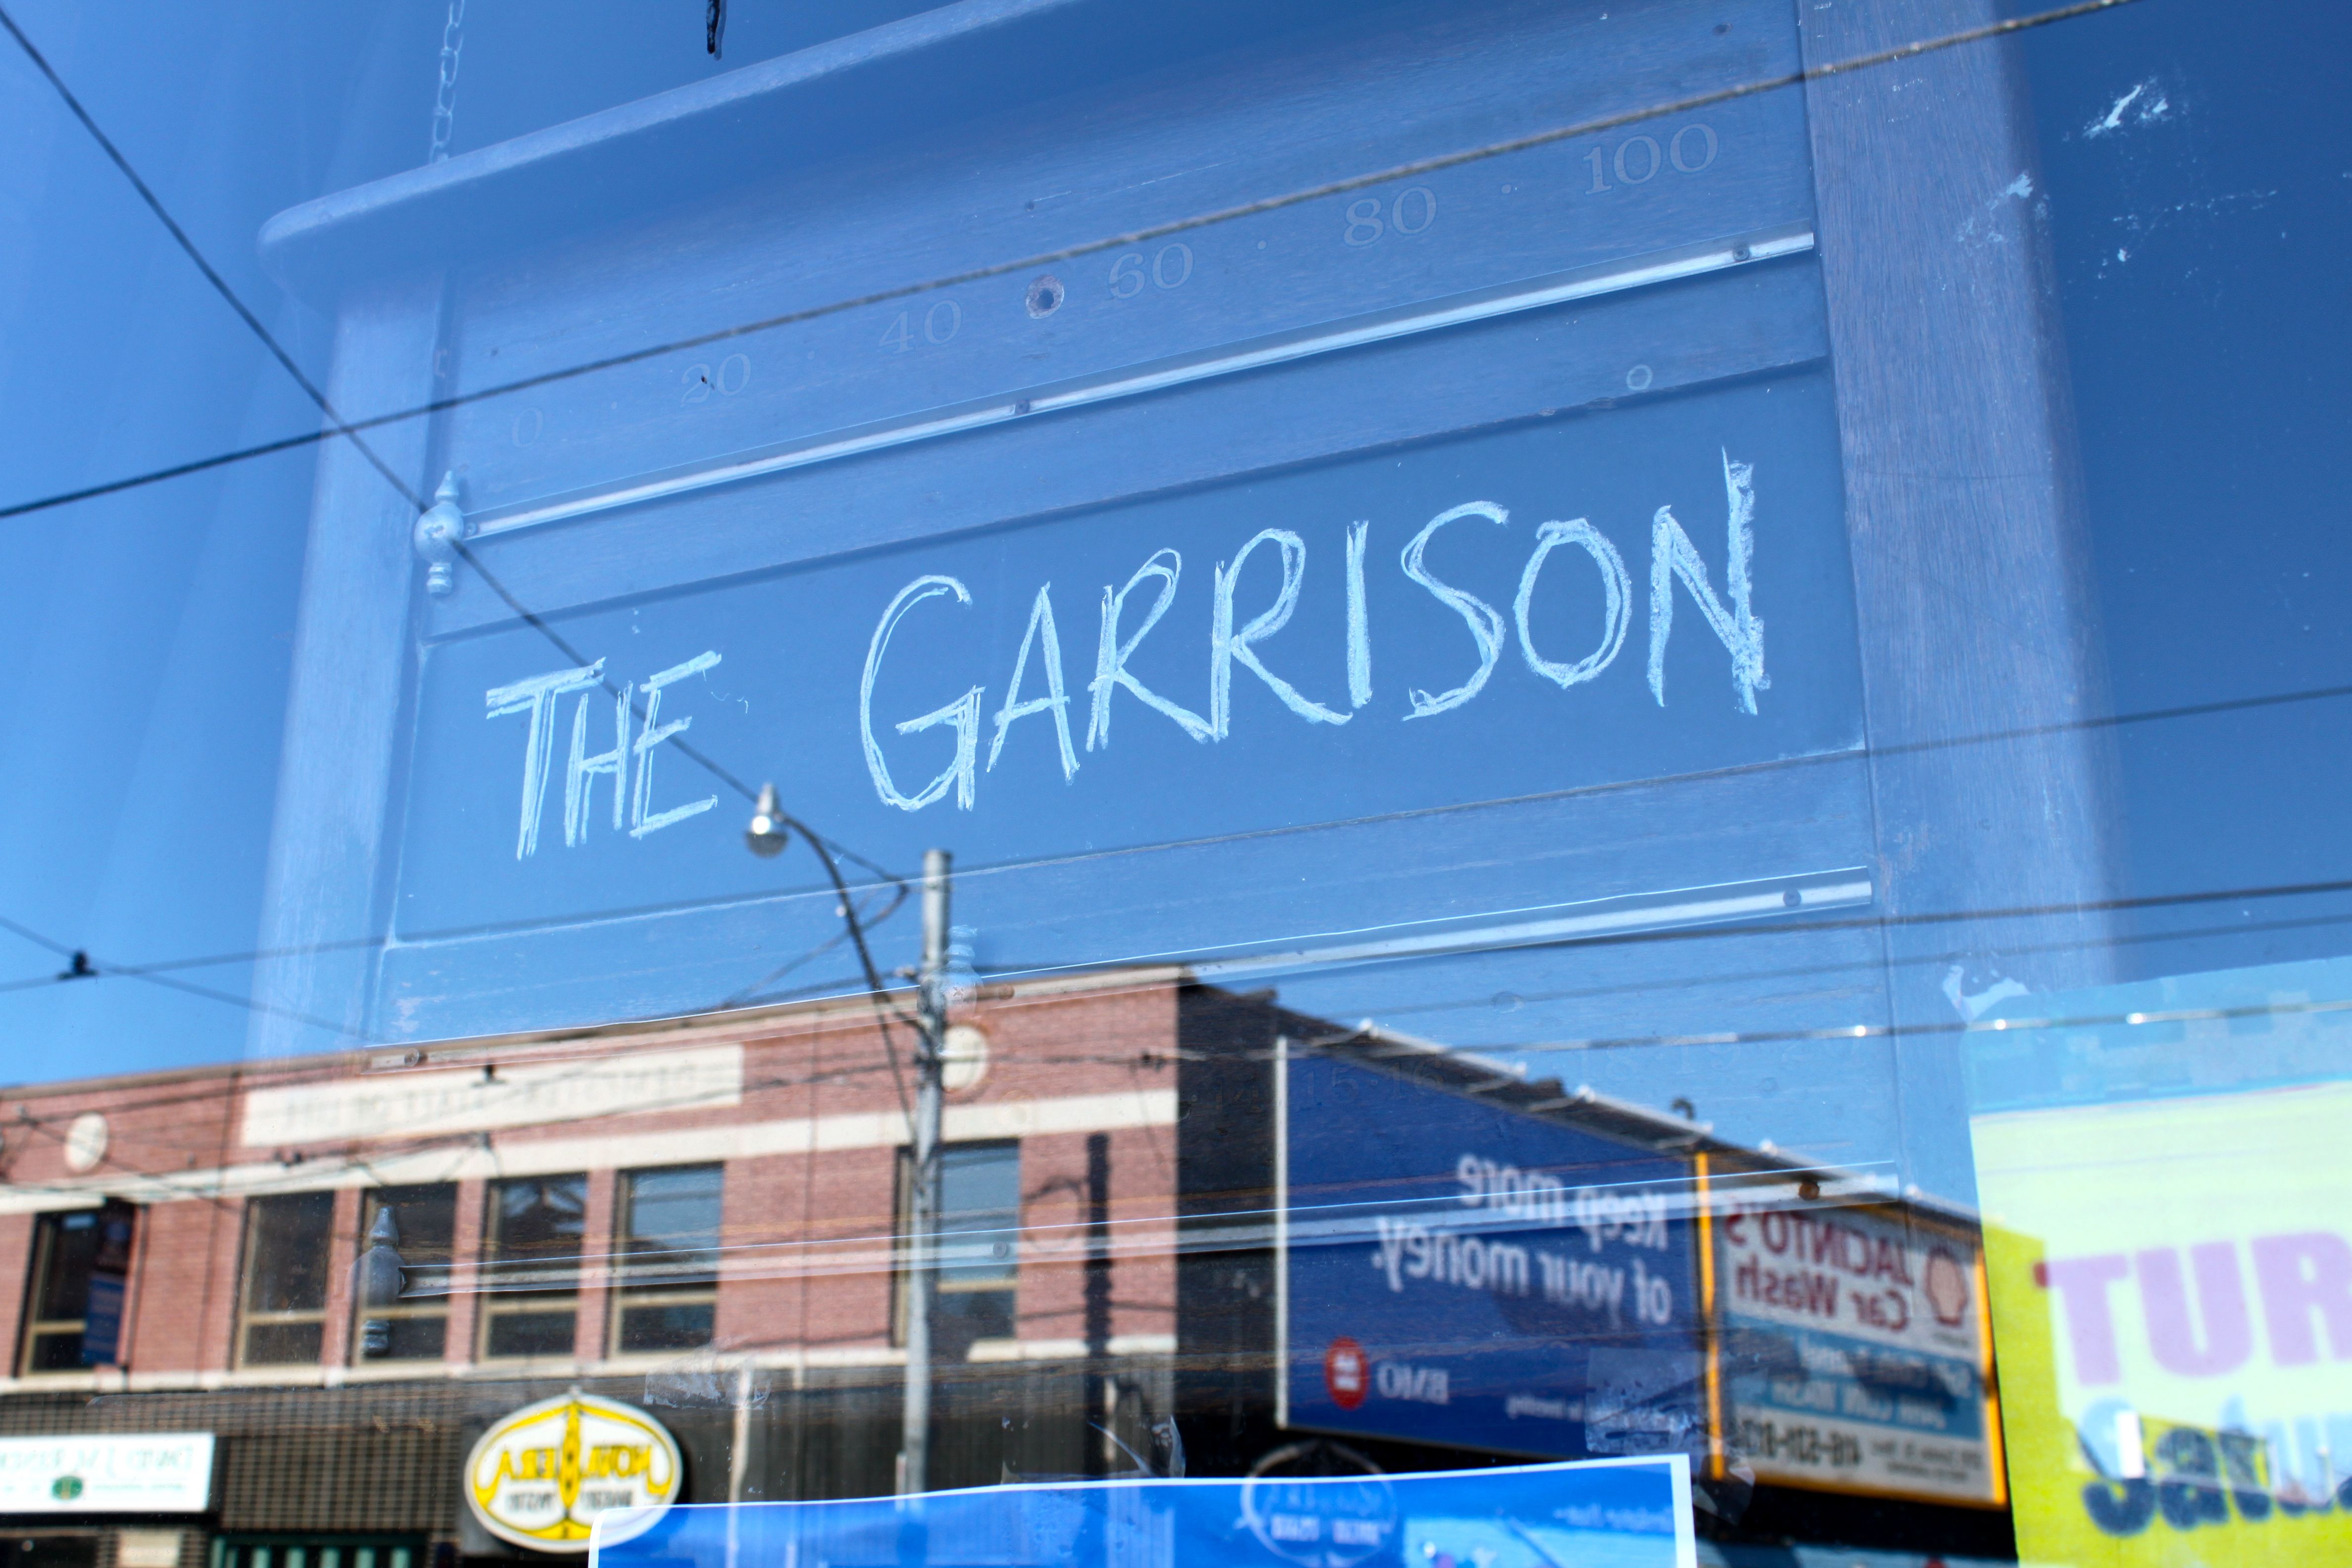 The Garrison sign